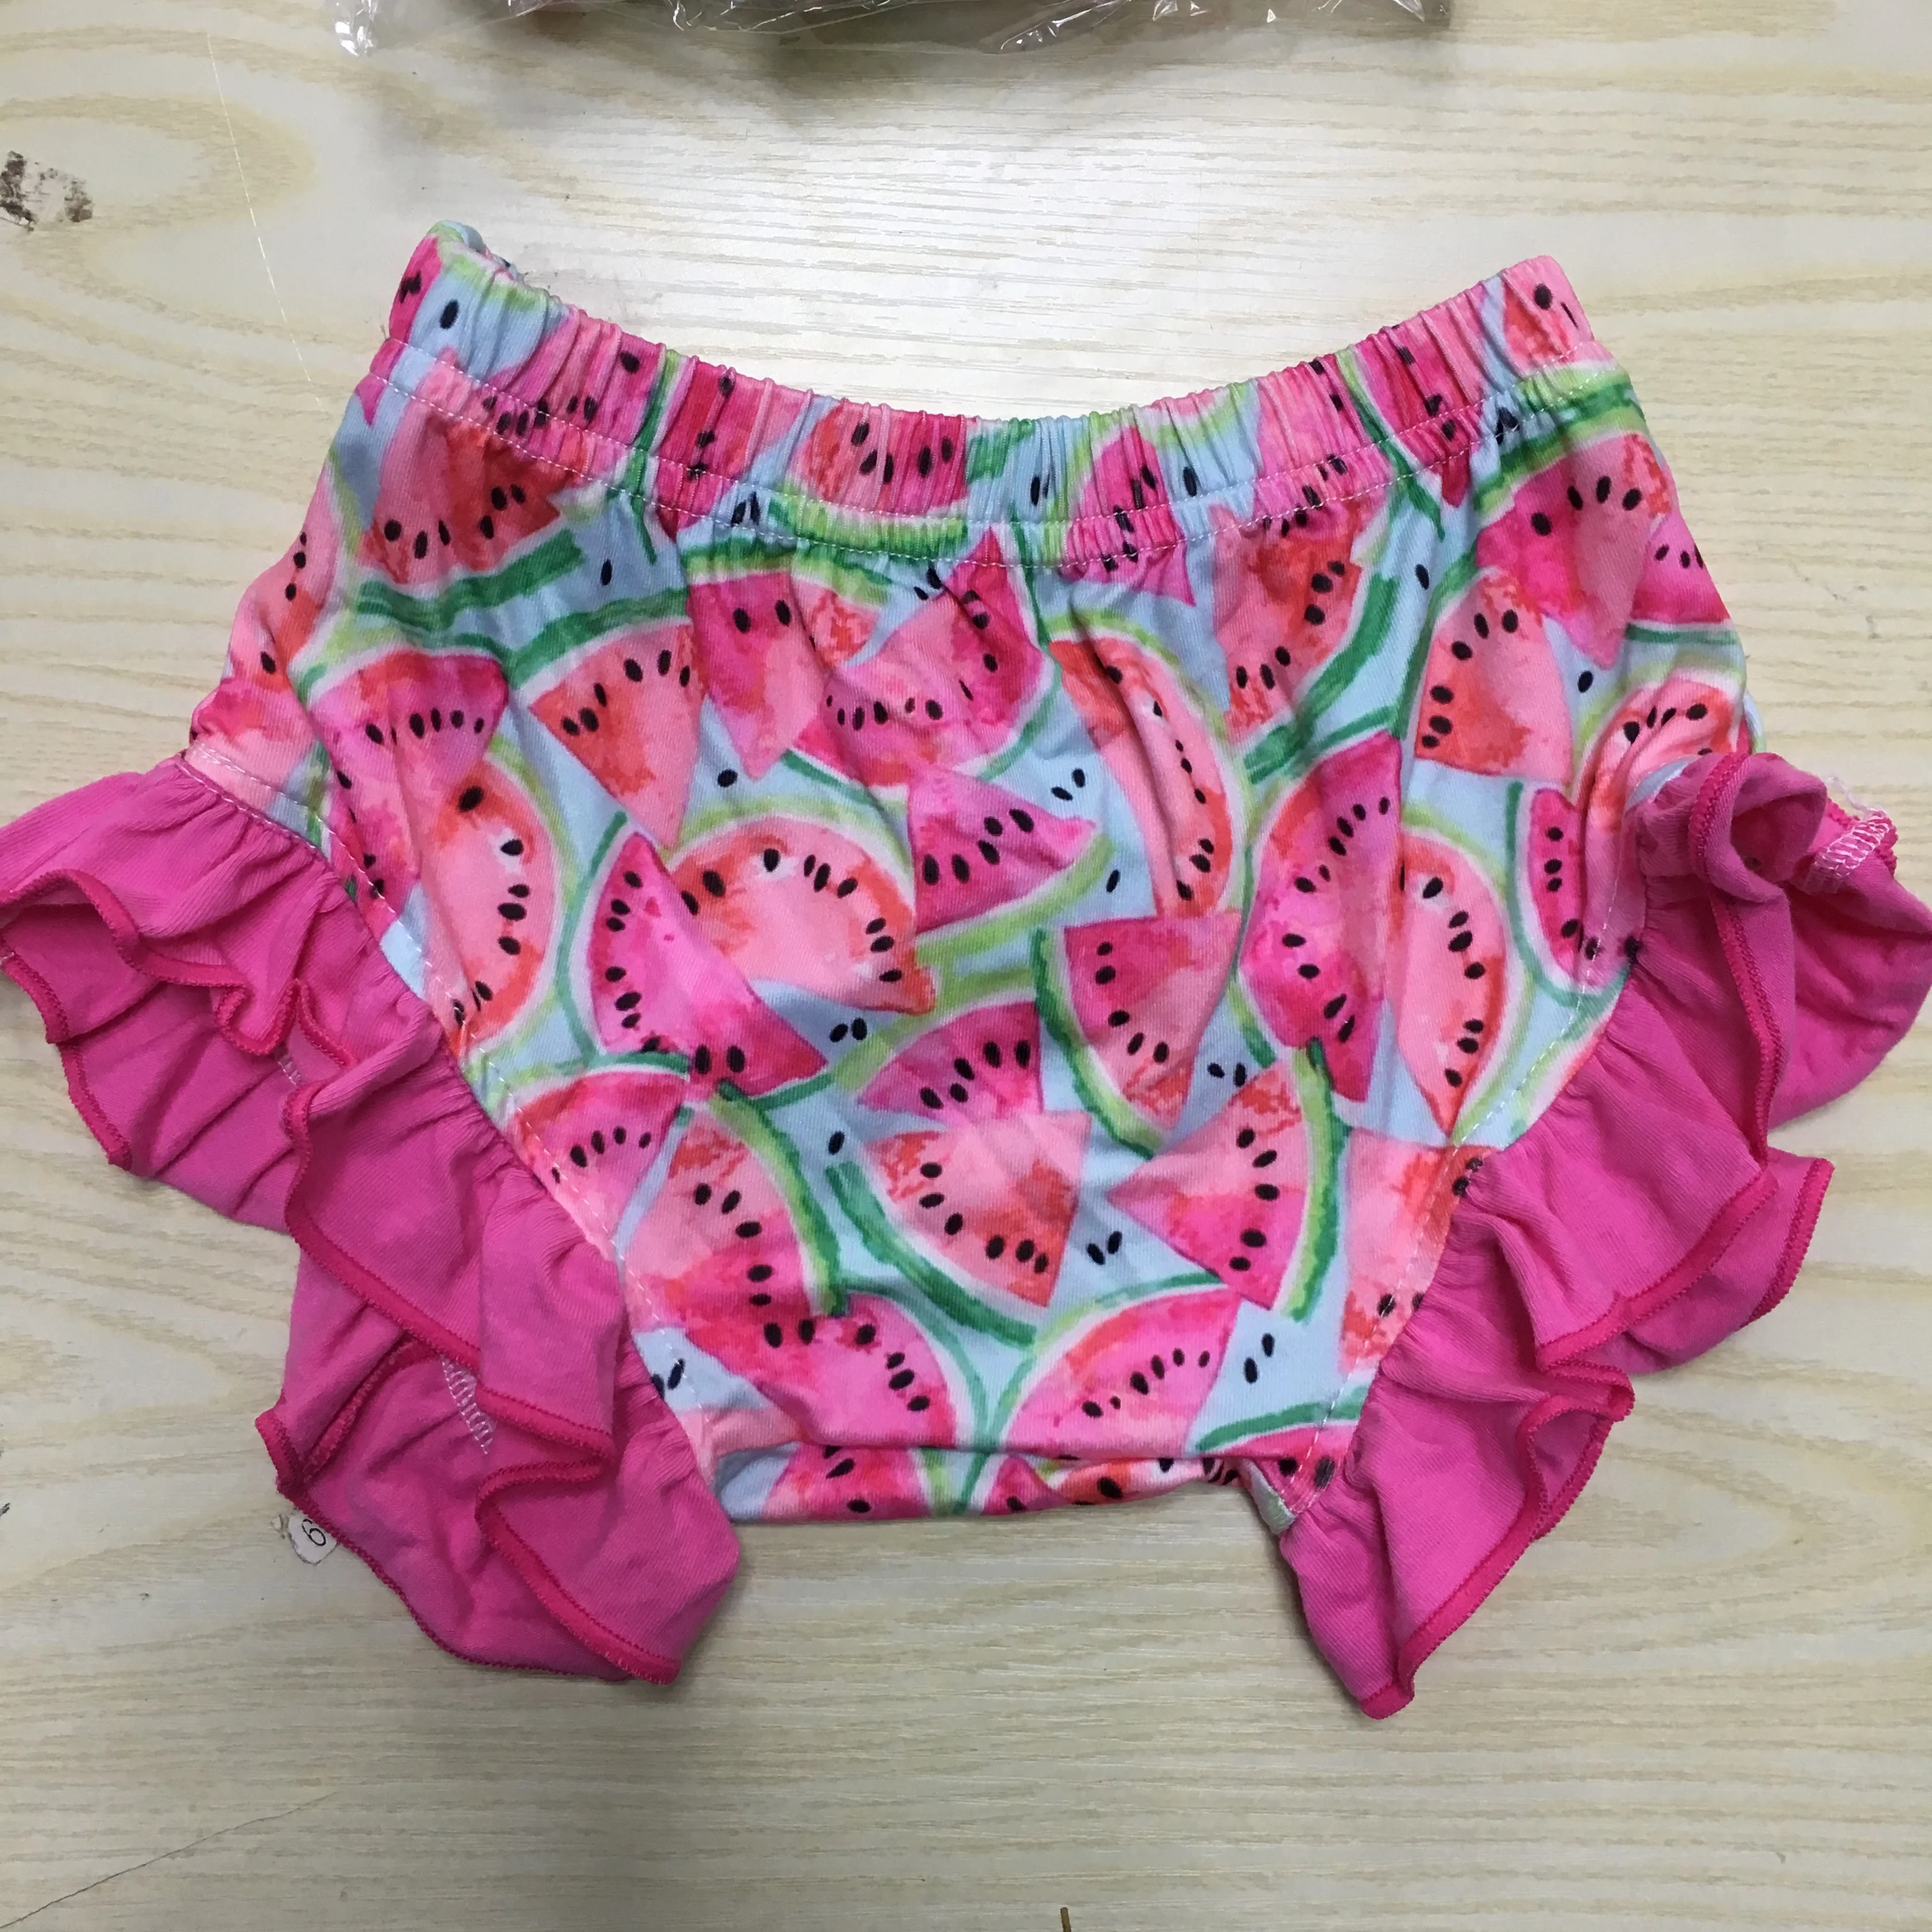 

2019 Baby clothes latest summer hot pants cotton ruffles shorts multiple color children infant shorts, Choose